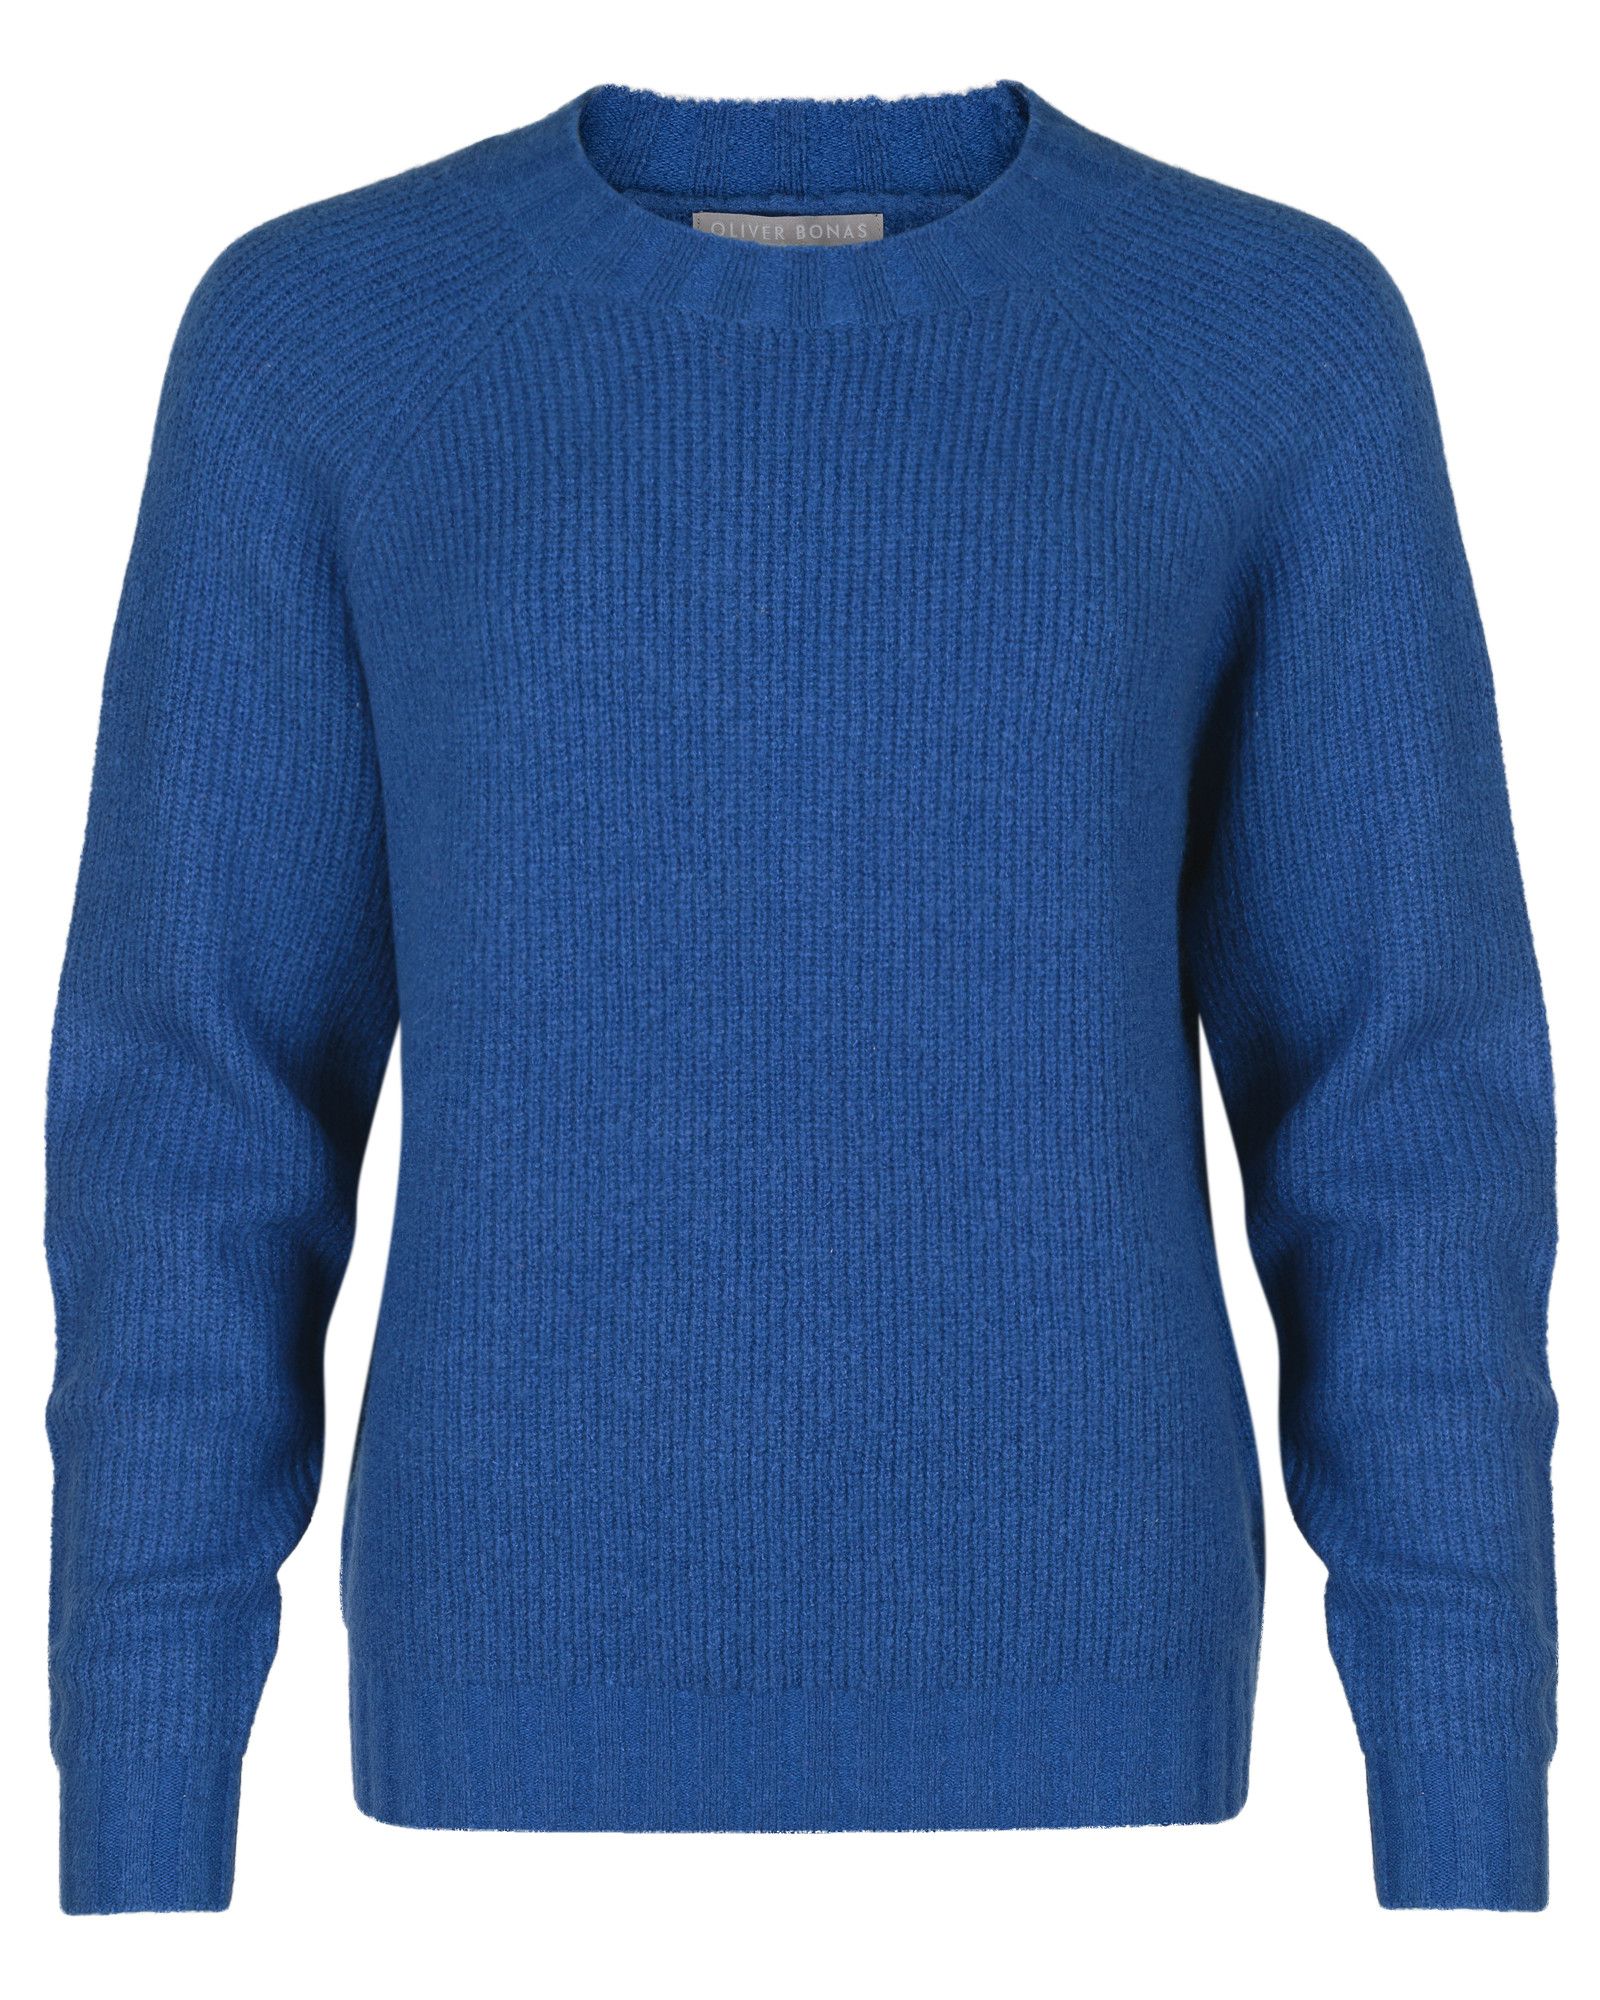 Lily Blue Knitted Jumper | Oliver Bonas